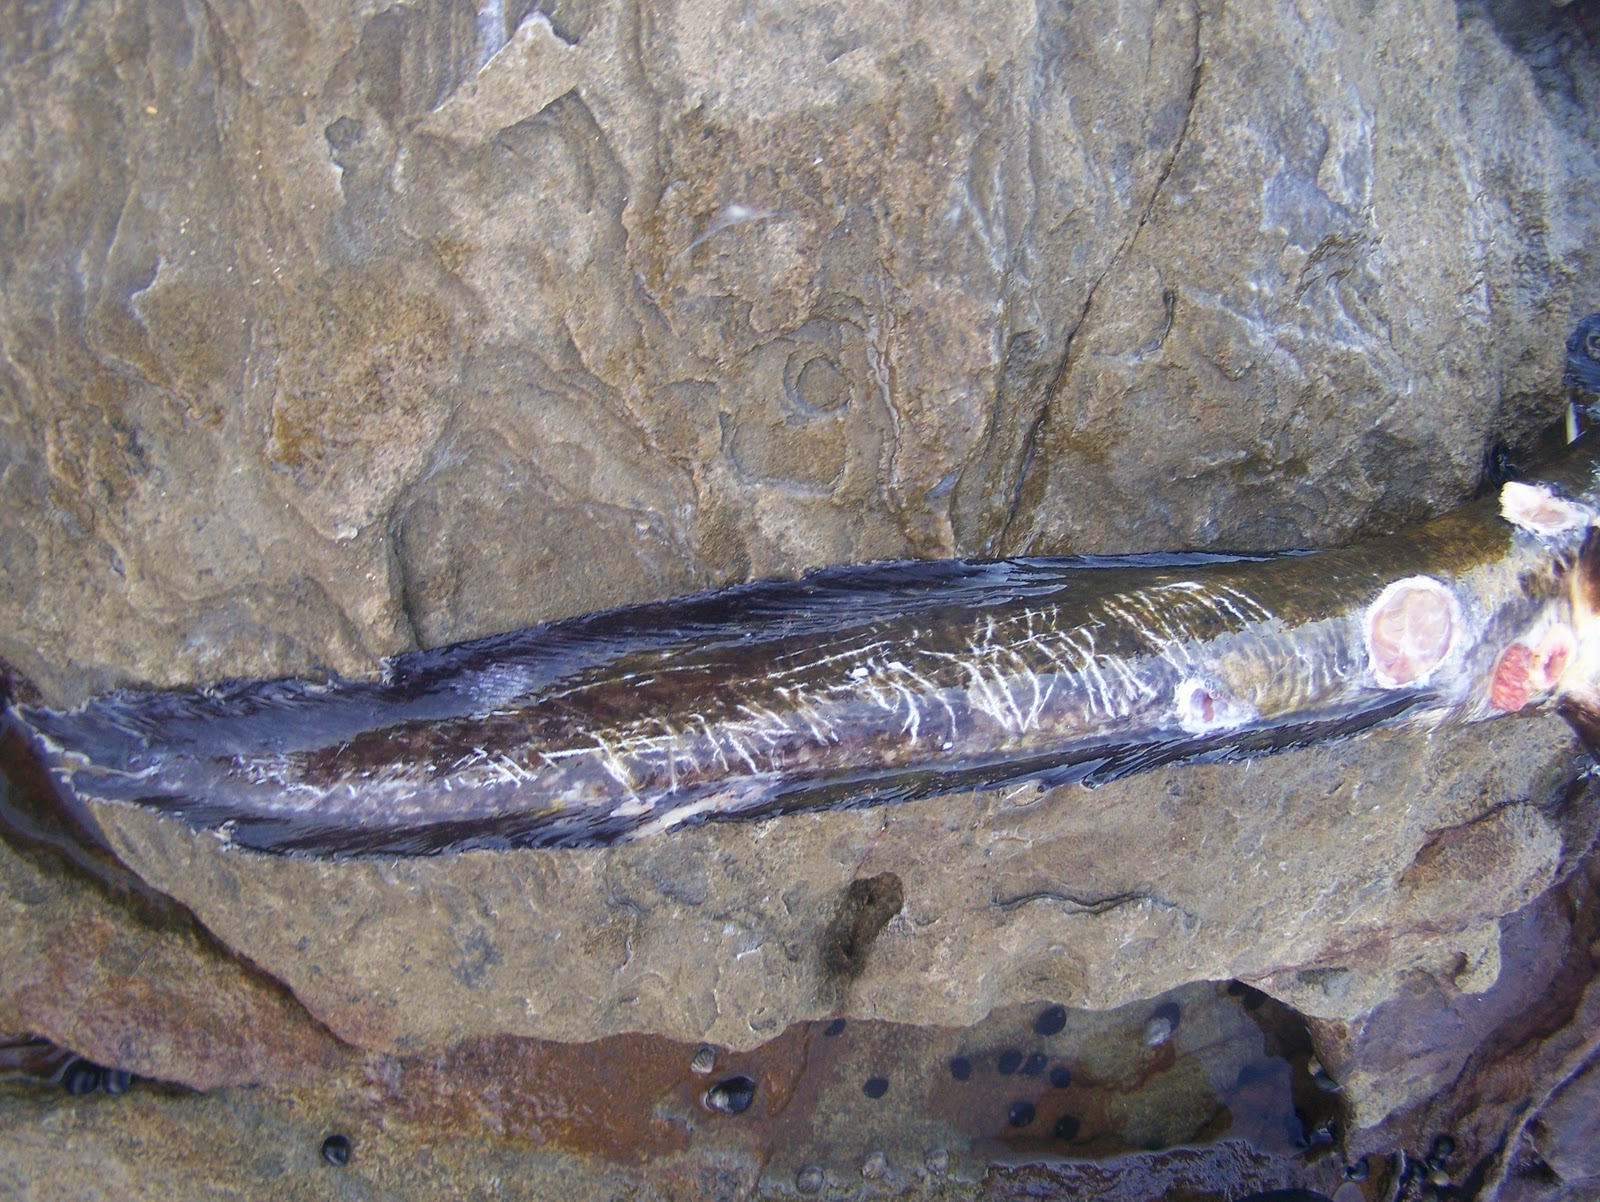 Little Australia: The Venomous Saltwater Catfish